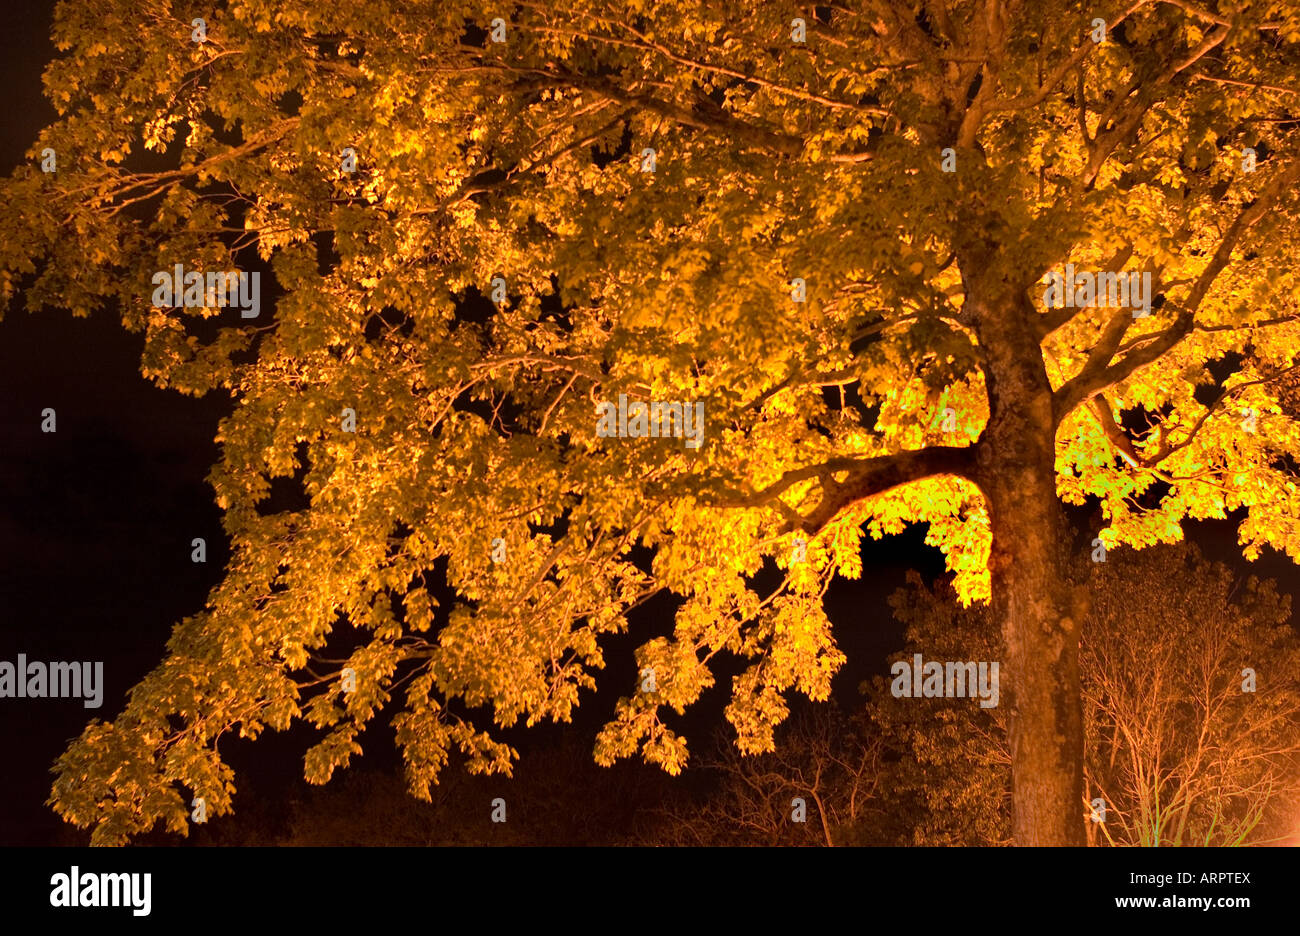 fall tree lite by street light at night Stock Photo